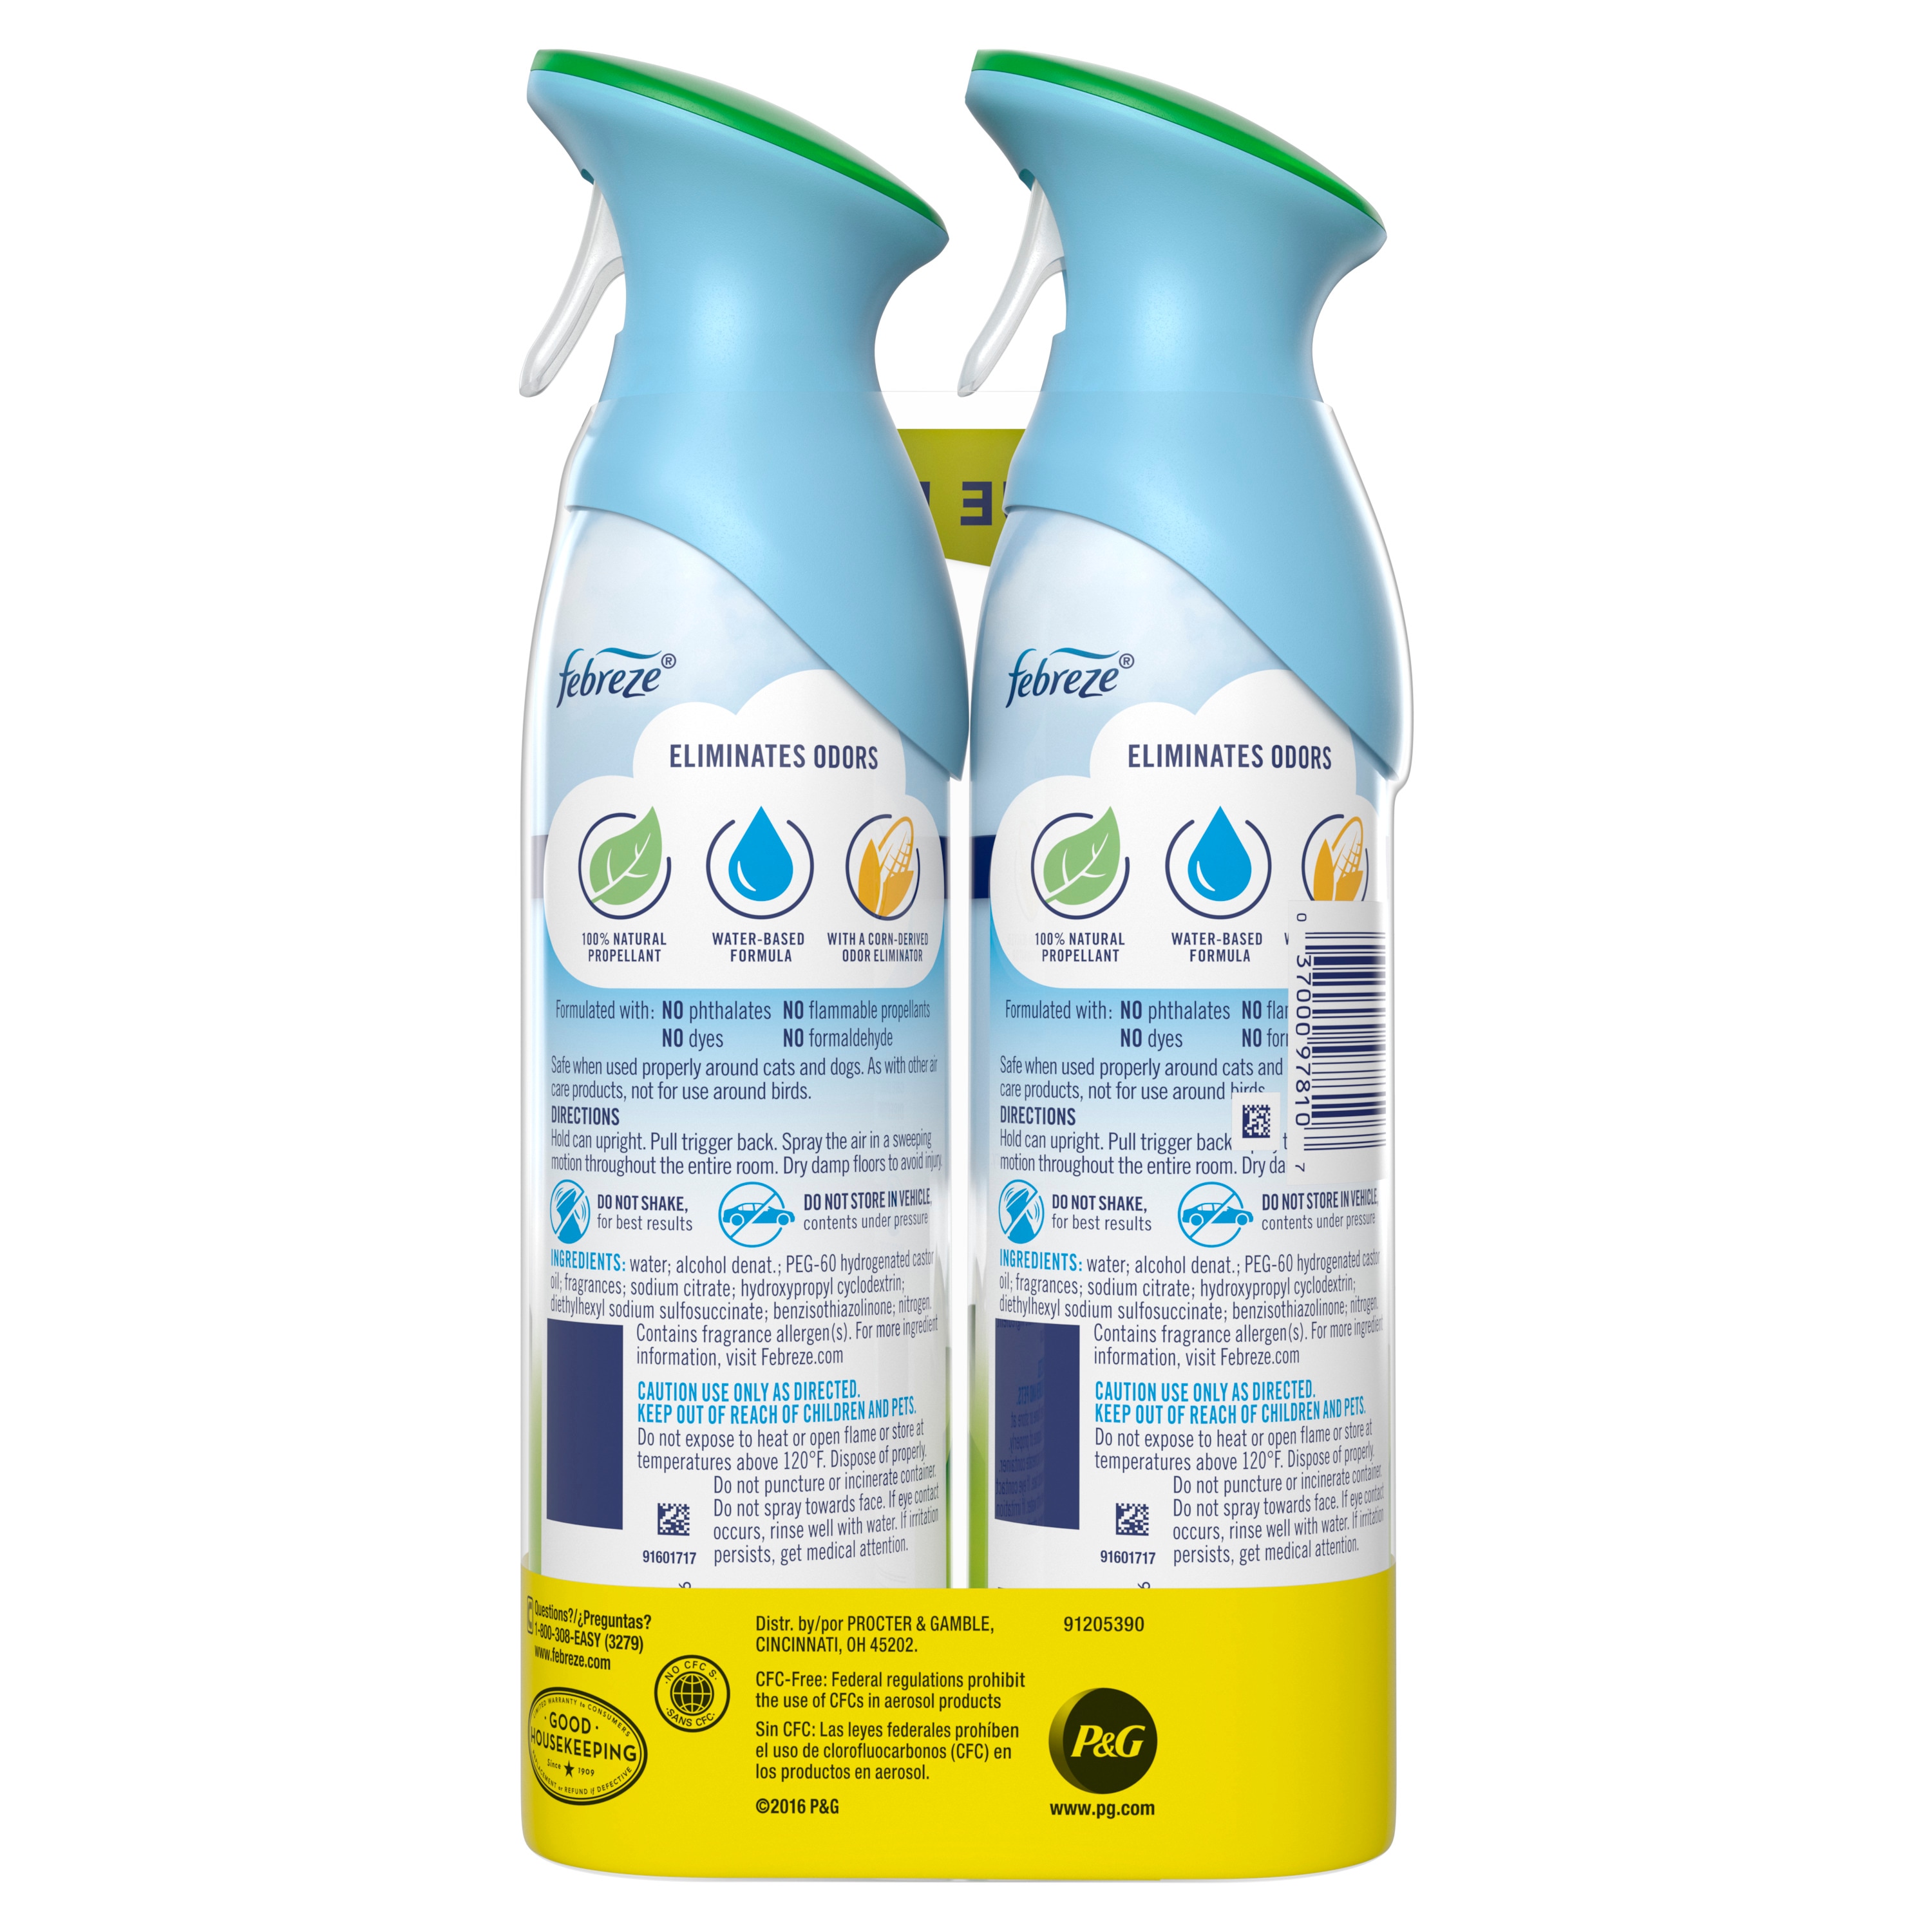 Febreze Air 8.8 oz. Original Gain Scent Air Freshener Spray (2